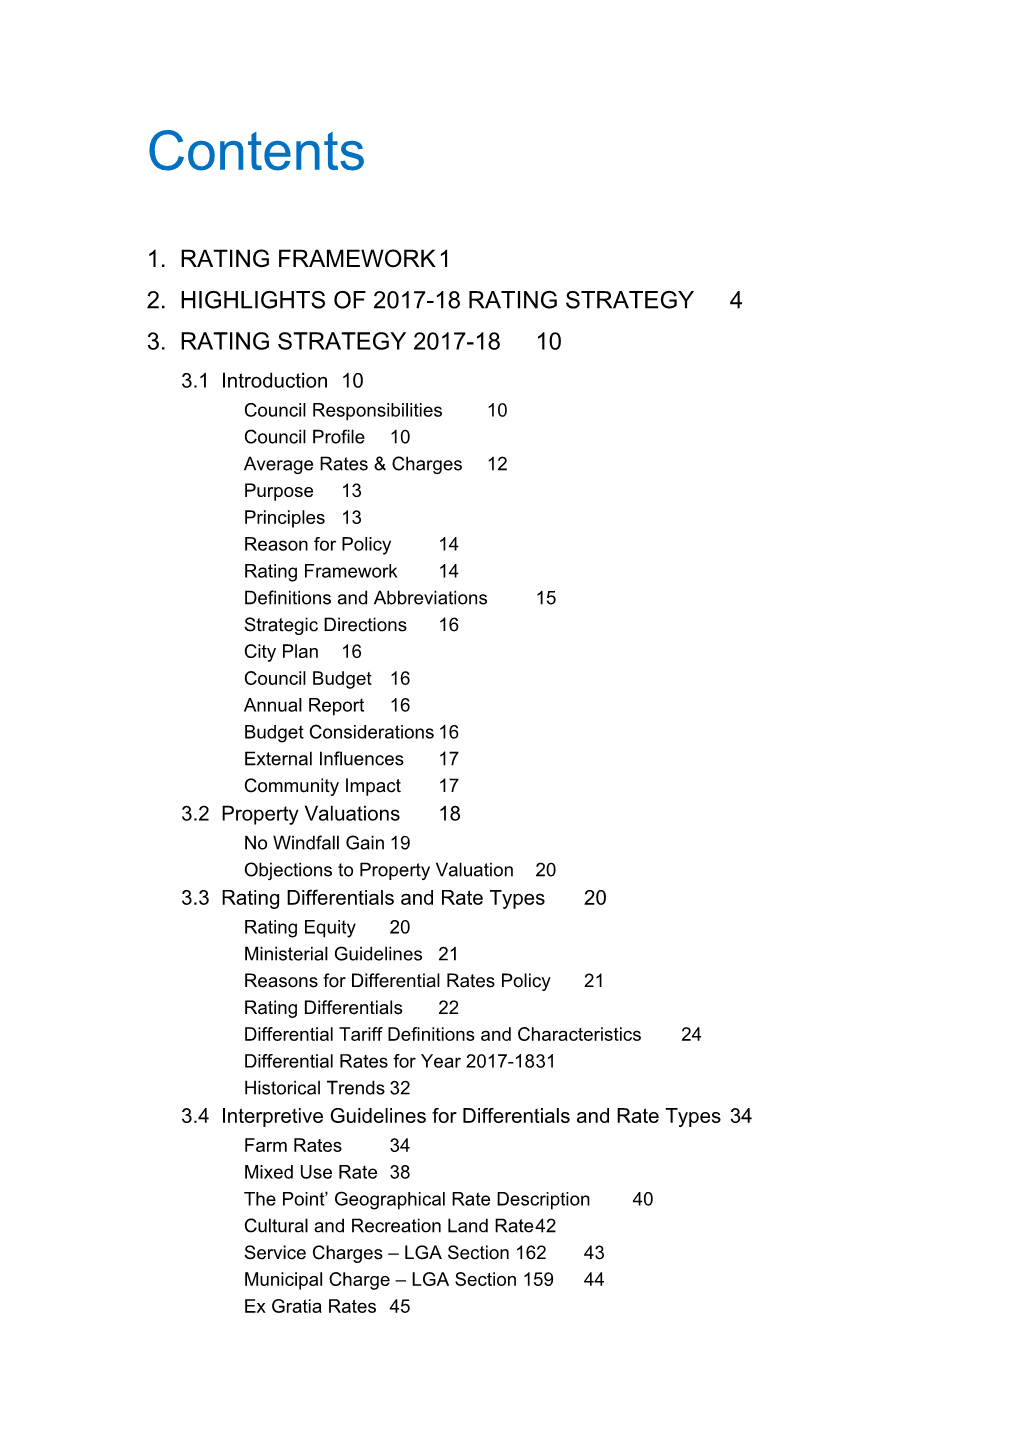 1. Rating Framework